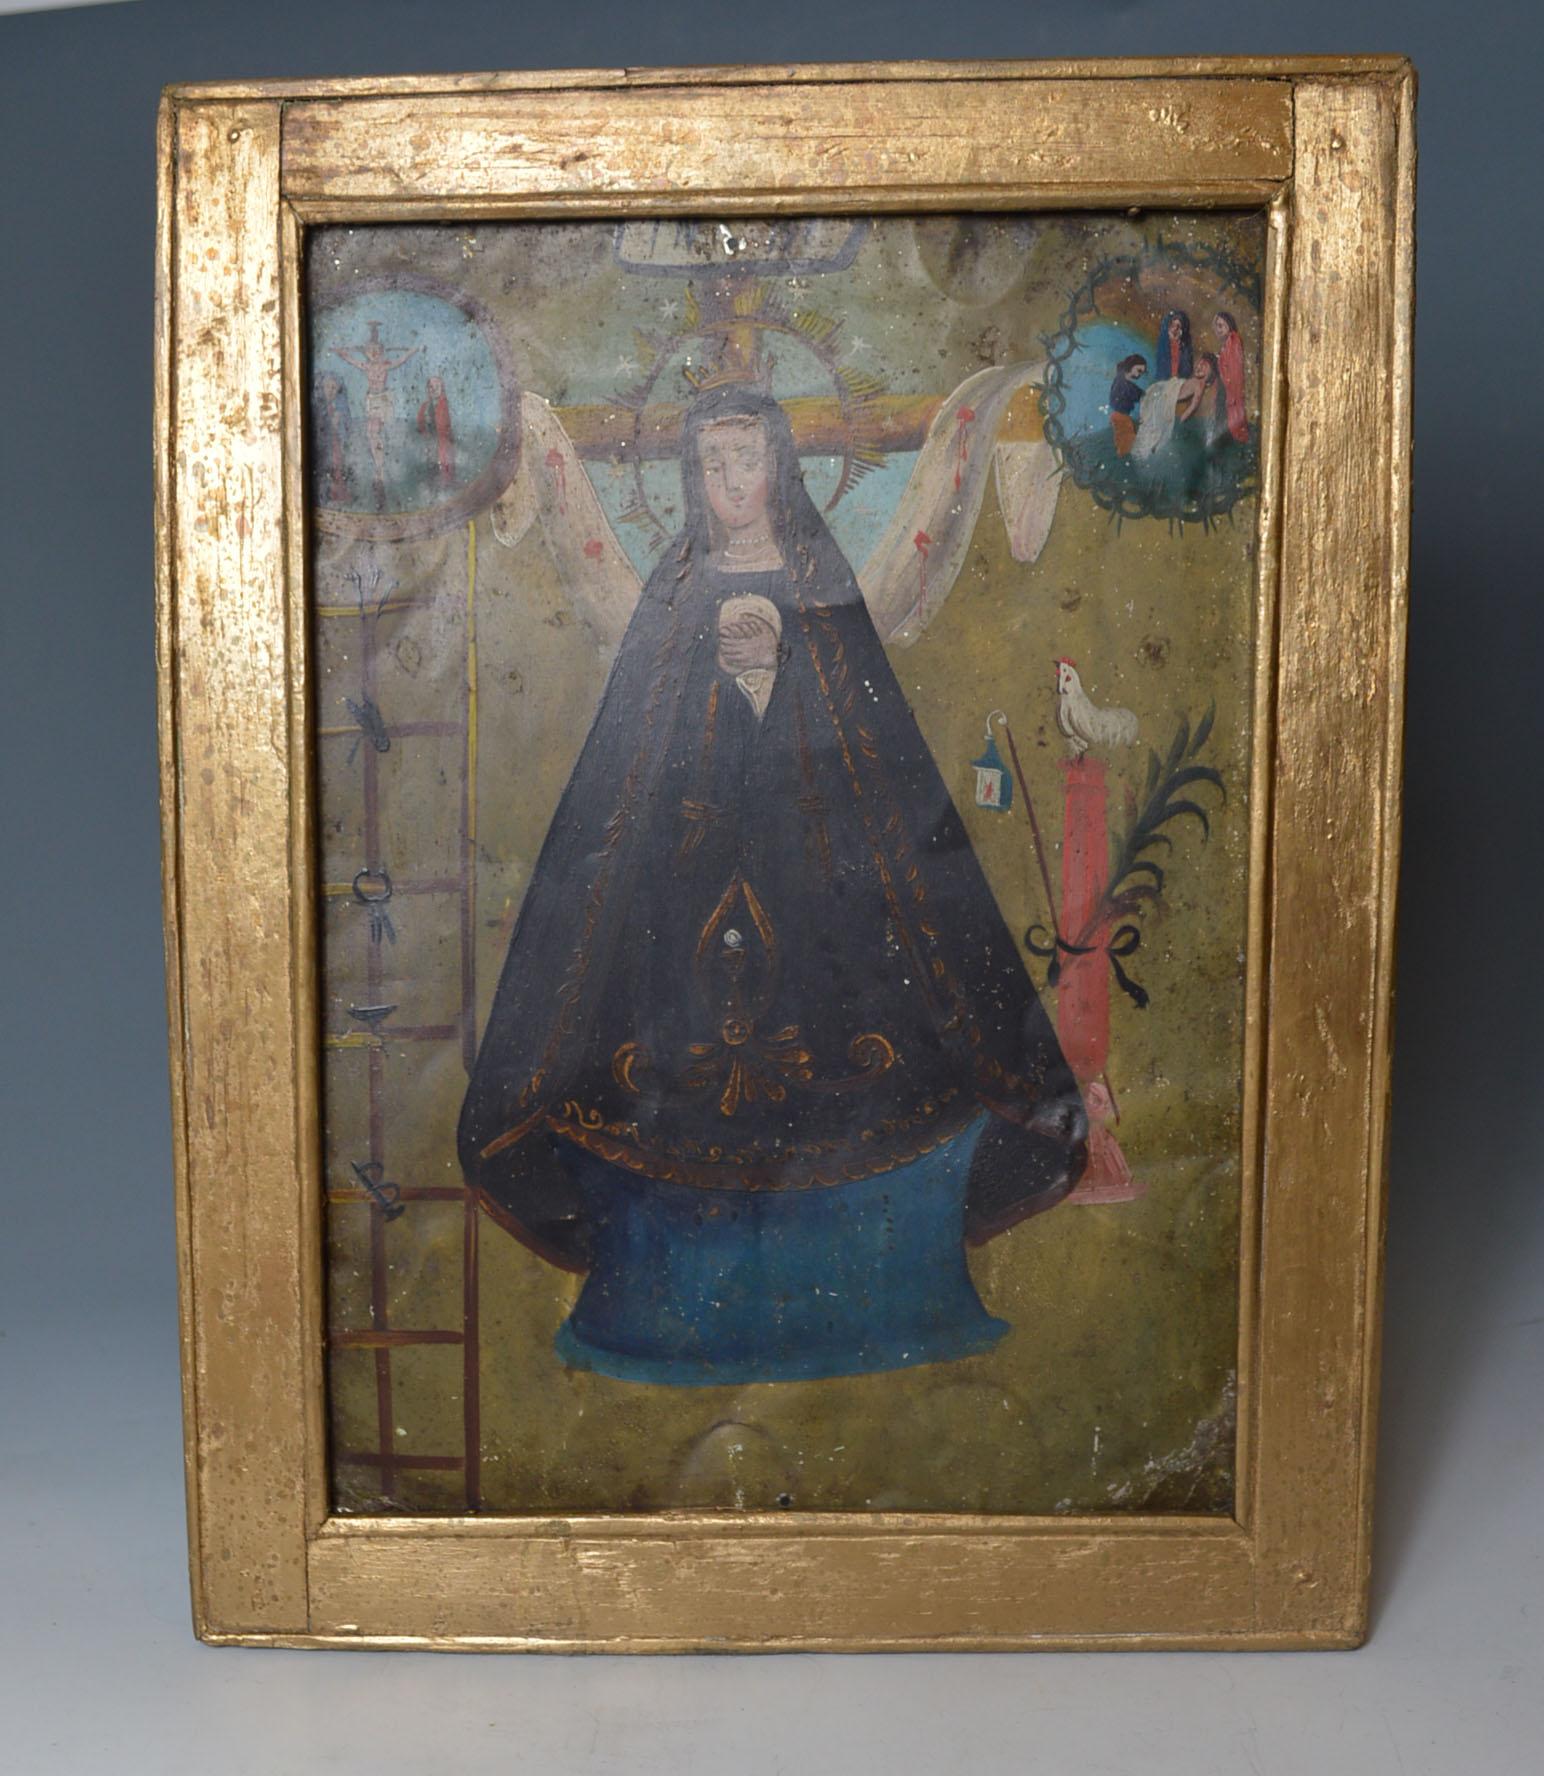 Original early 19th century antique Mexican retablo painting on tin
retablos, called 